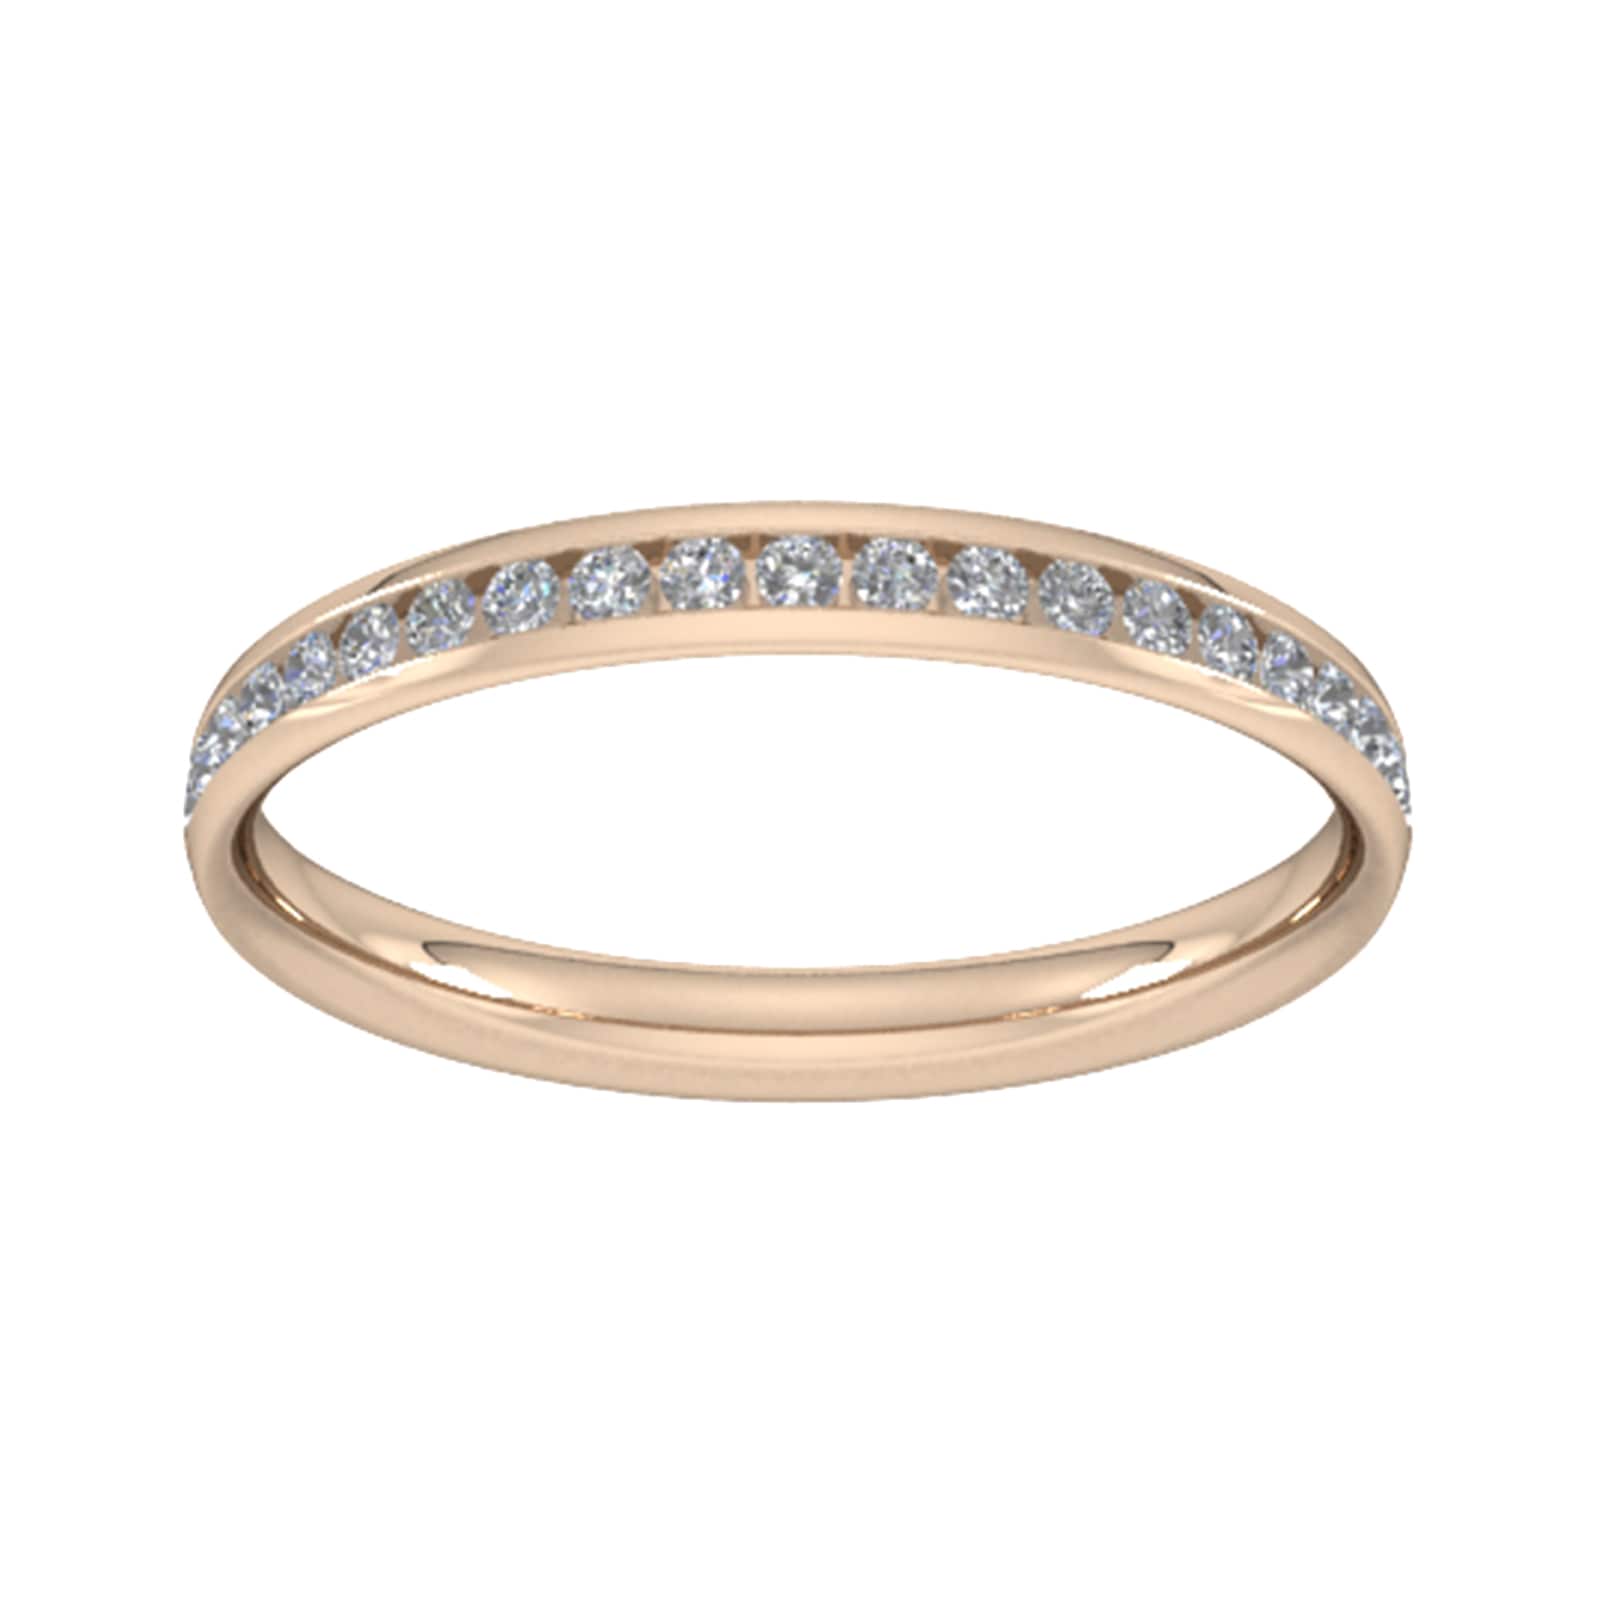 0.21 Carat Total Weight Half Channel Set Brilliant Cut Diamond Wedding Ring In 18 Carat Rose Gold - Ring Size U